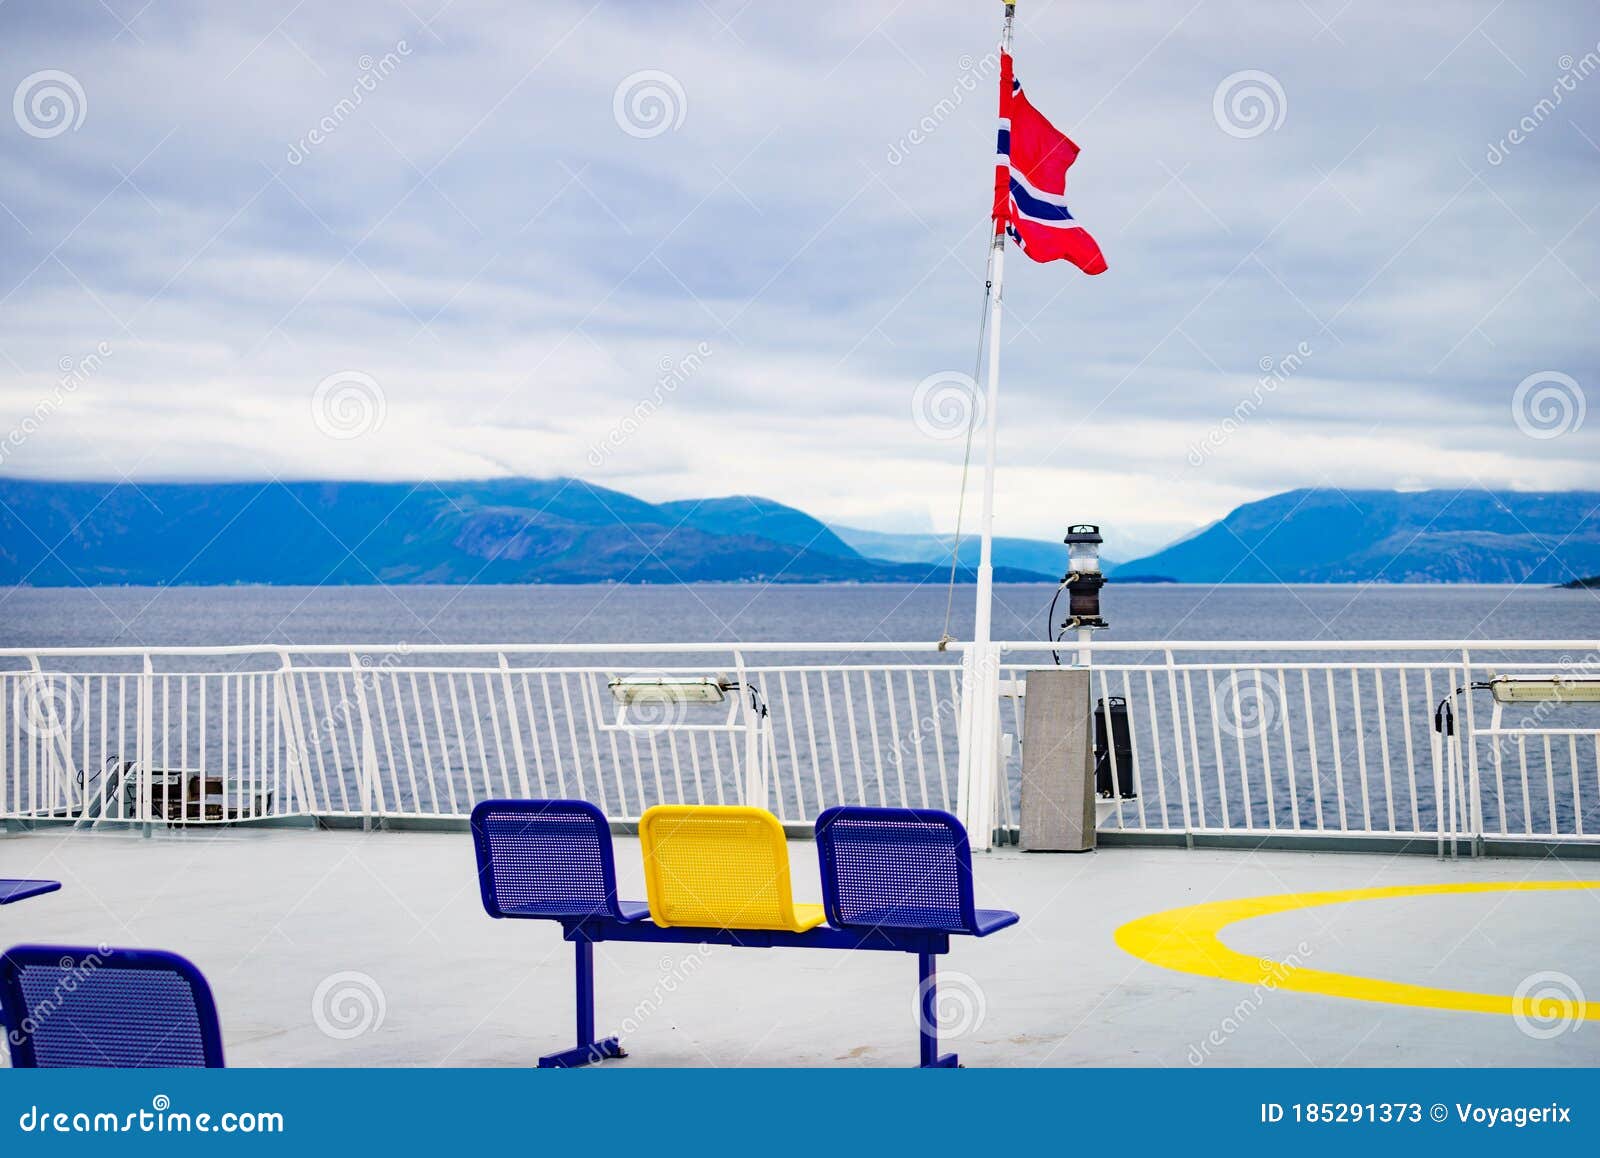 Evne egetræ Vandt Ferry Boat Ride Route To Lofoten Islands Norway Stock Image - Image of  norwegian, traveling: 185291373